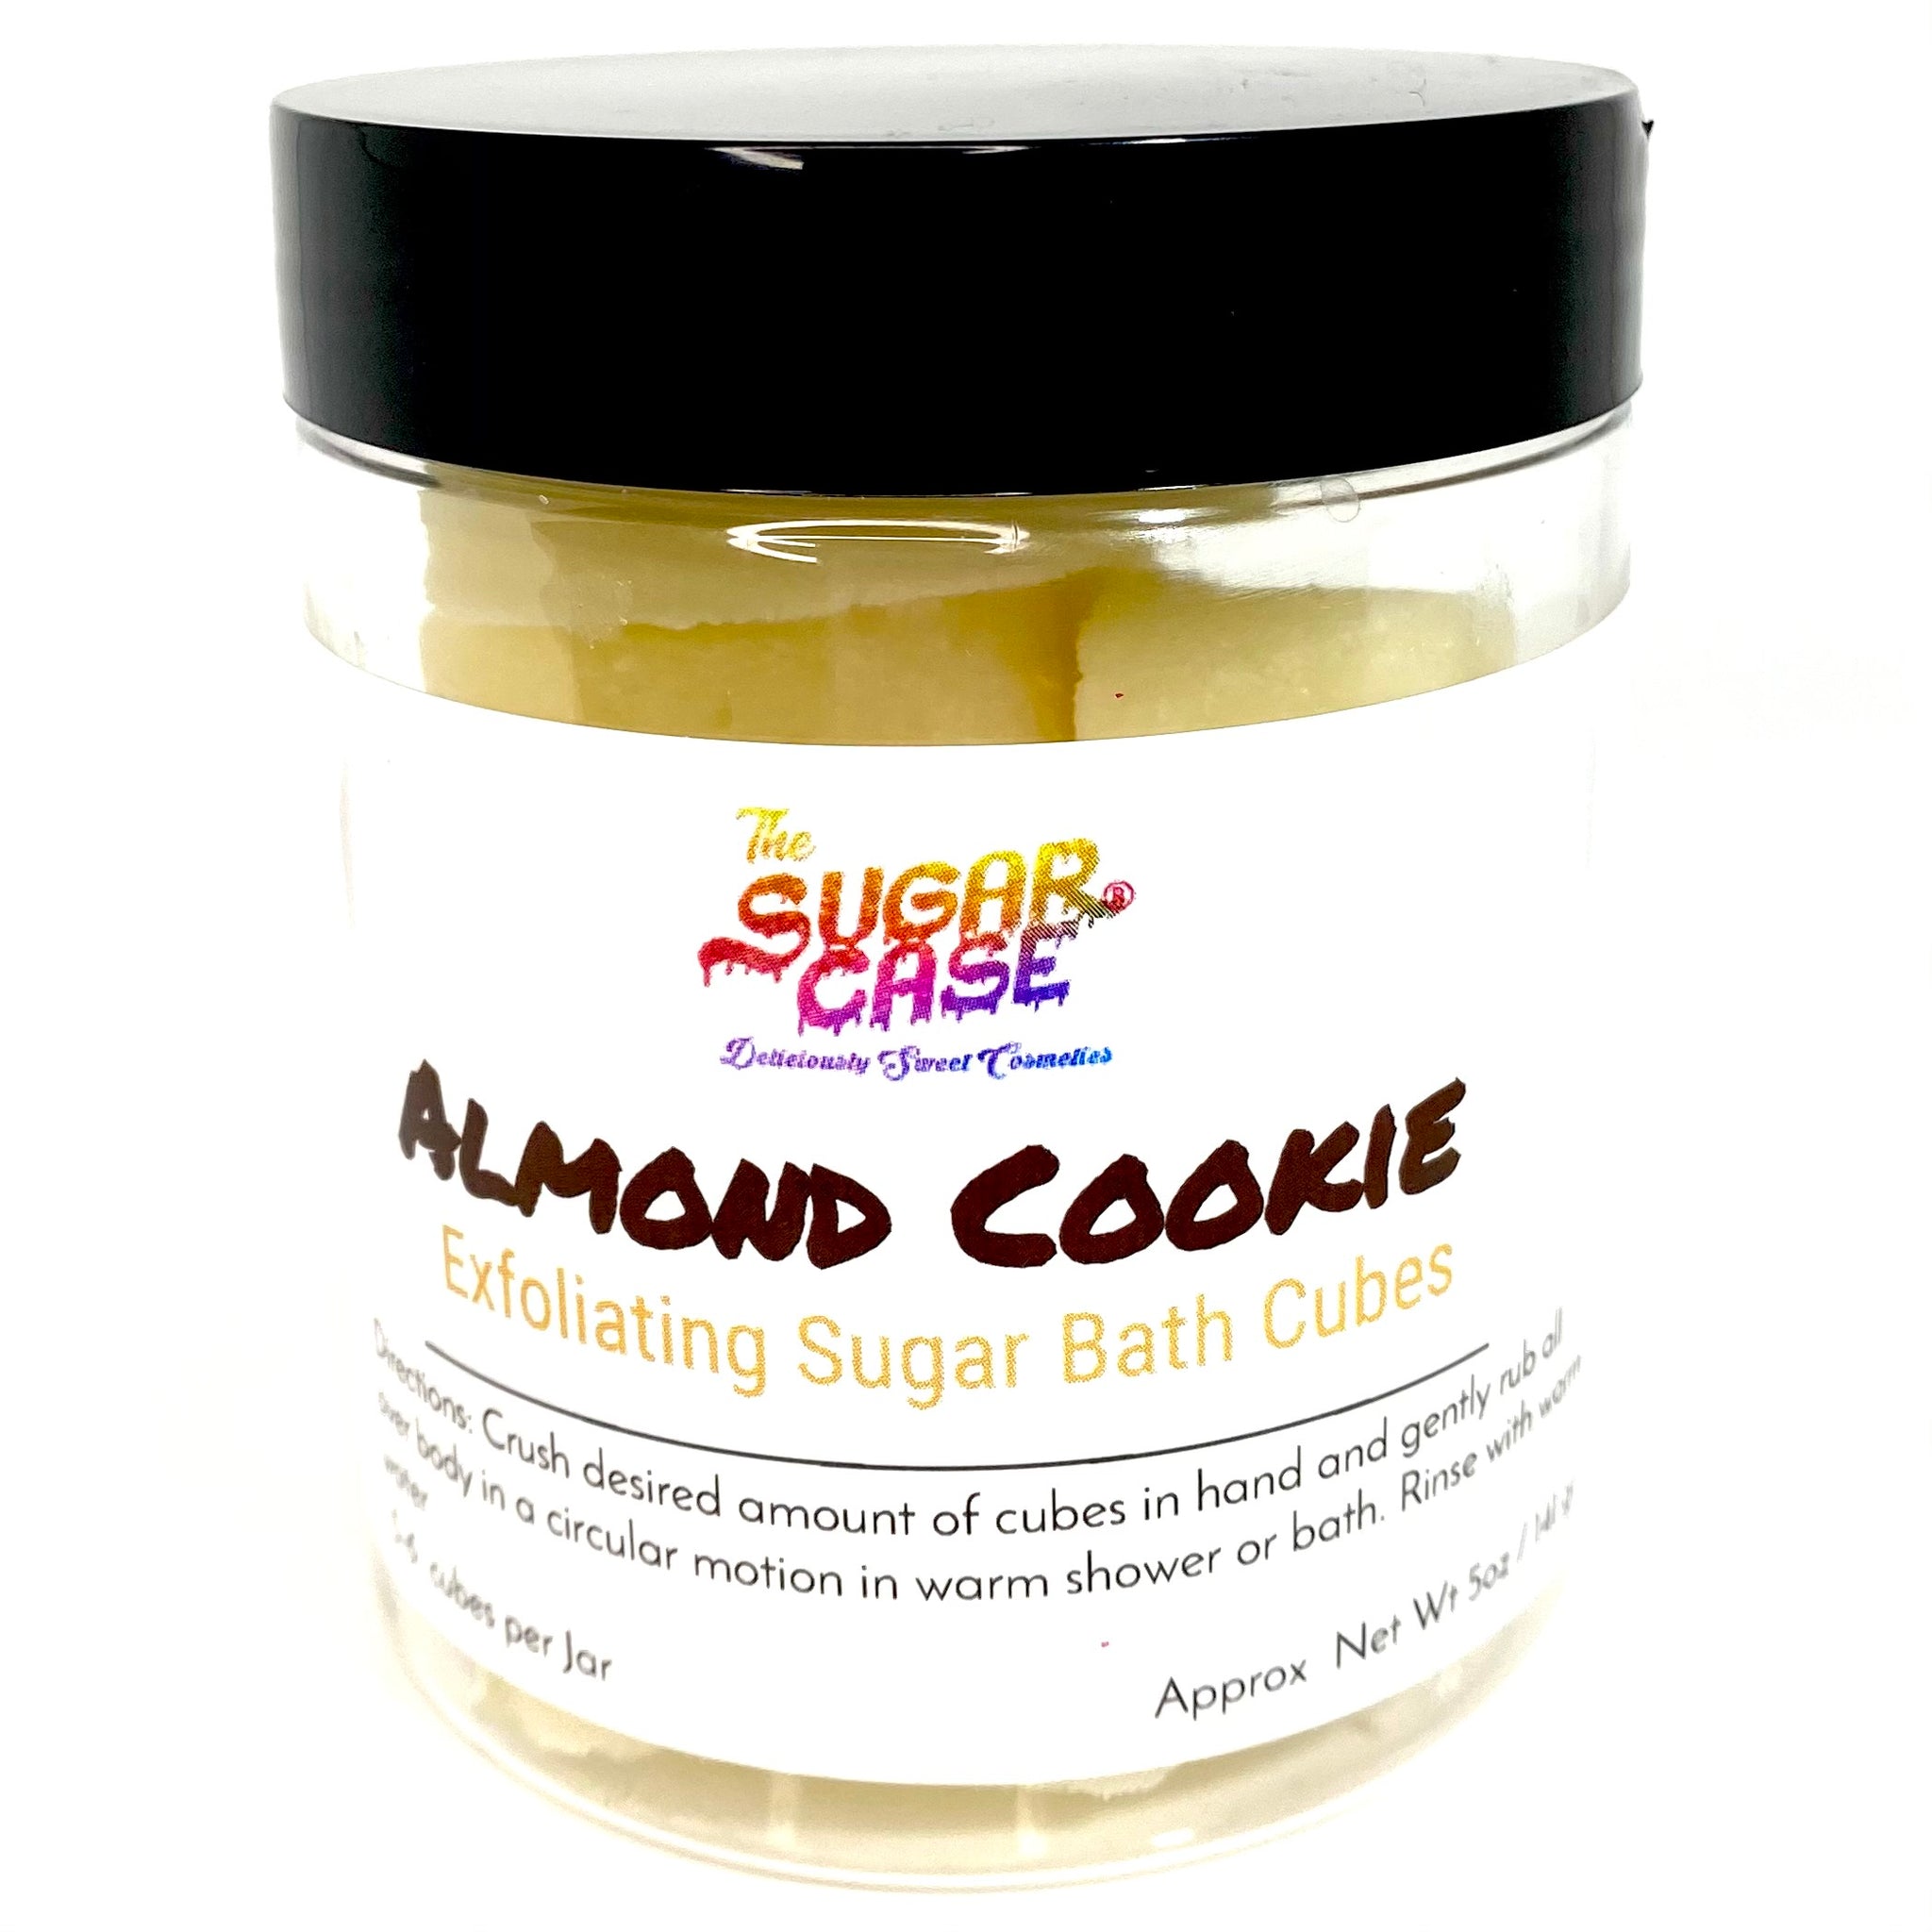 Almond Cookie Exfoliating Sugar Cubes